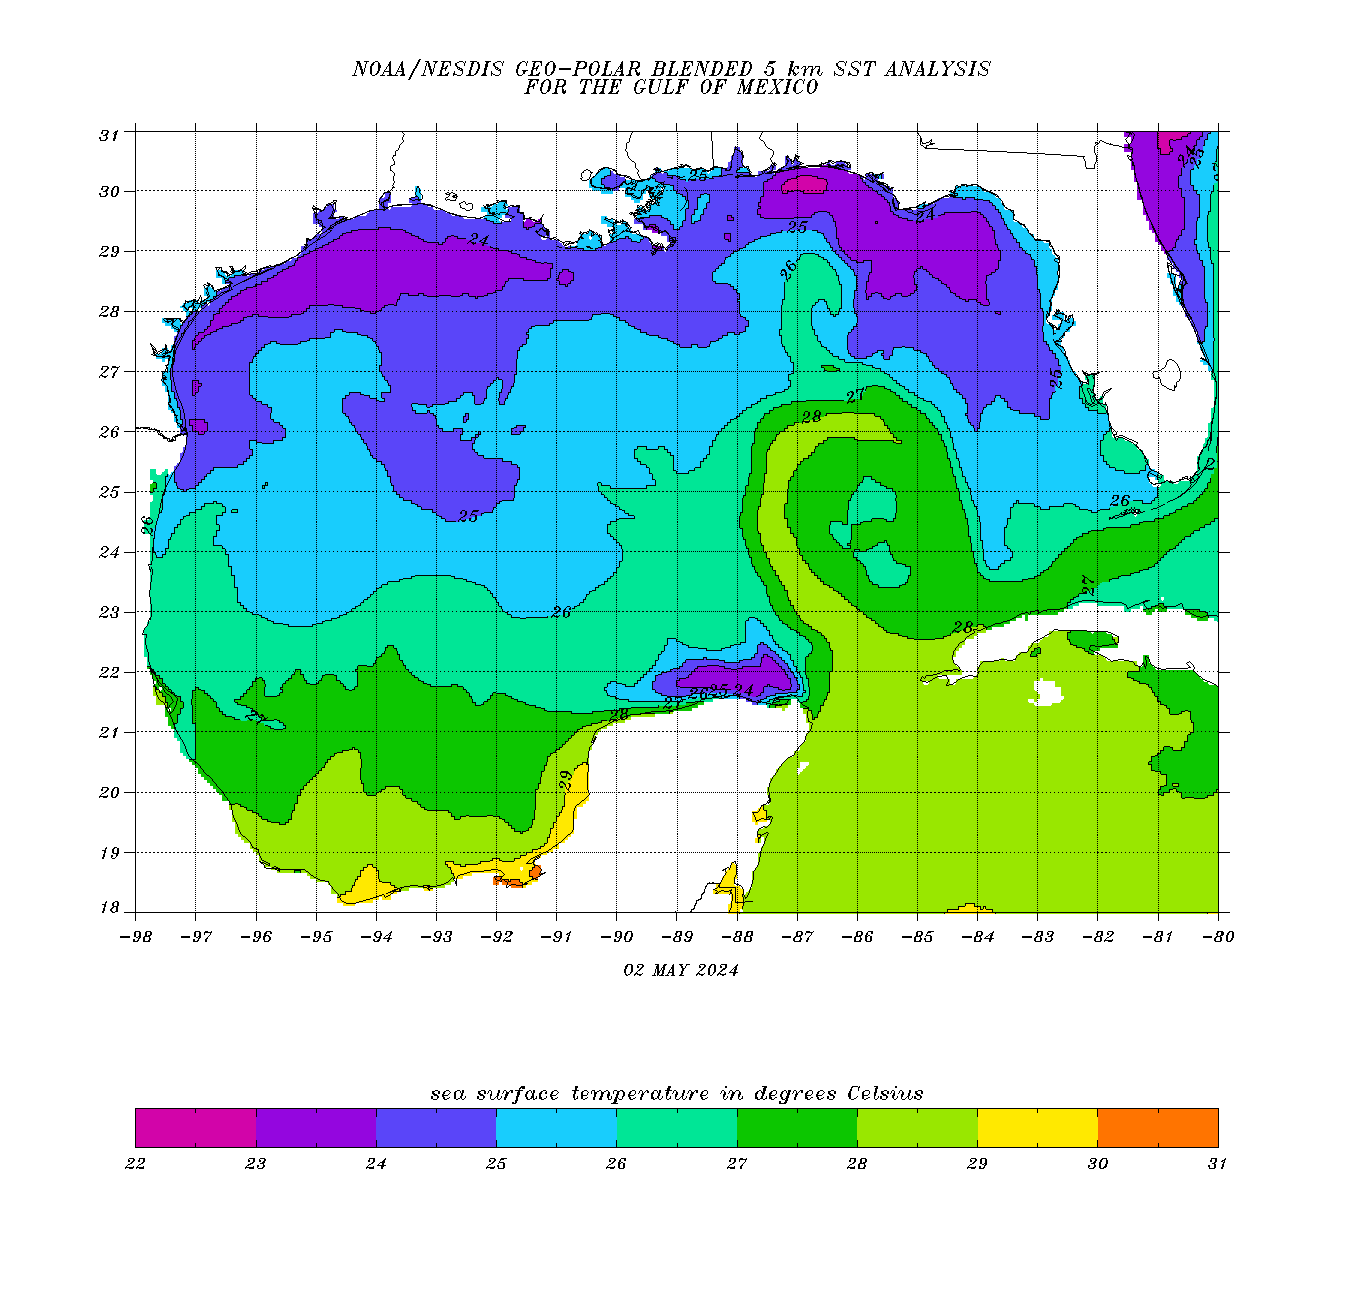 Gulf of Mexico Sea Temperatures